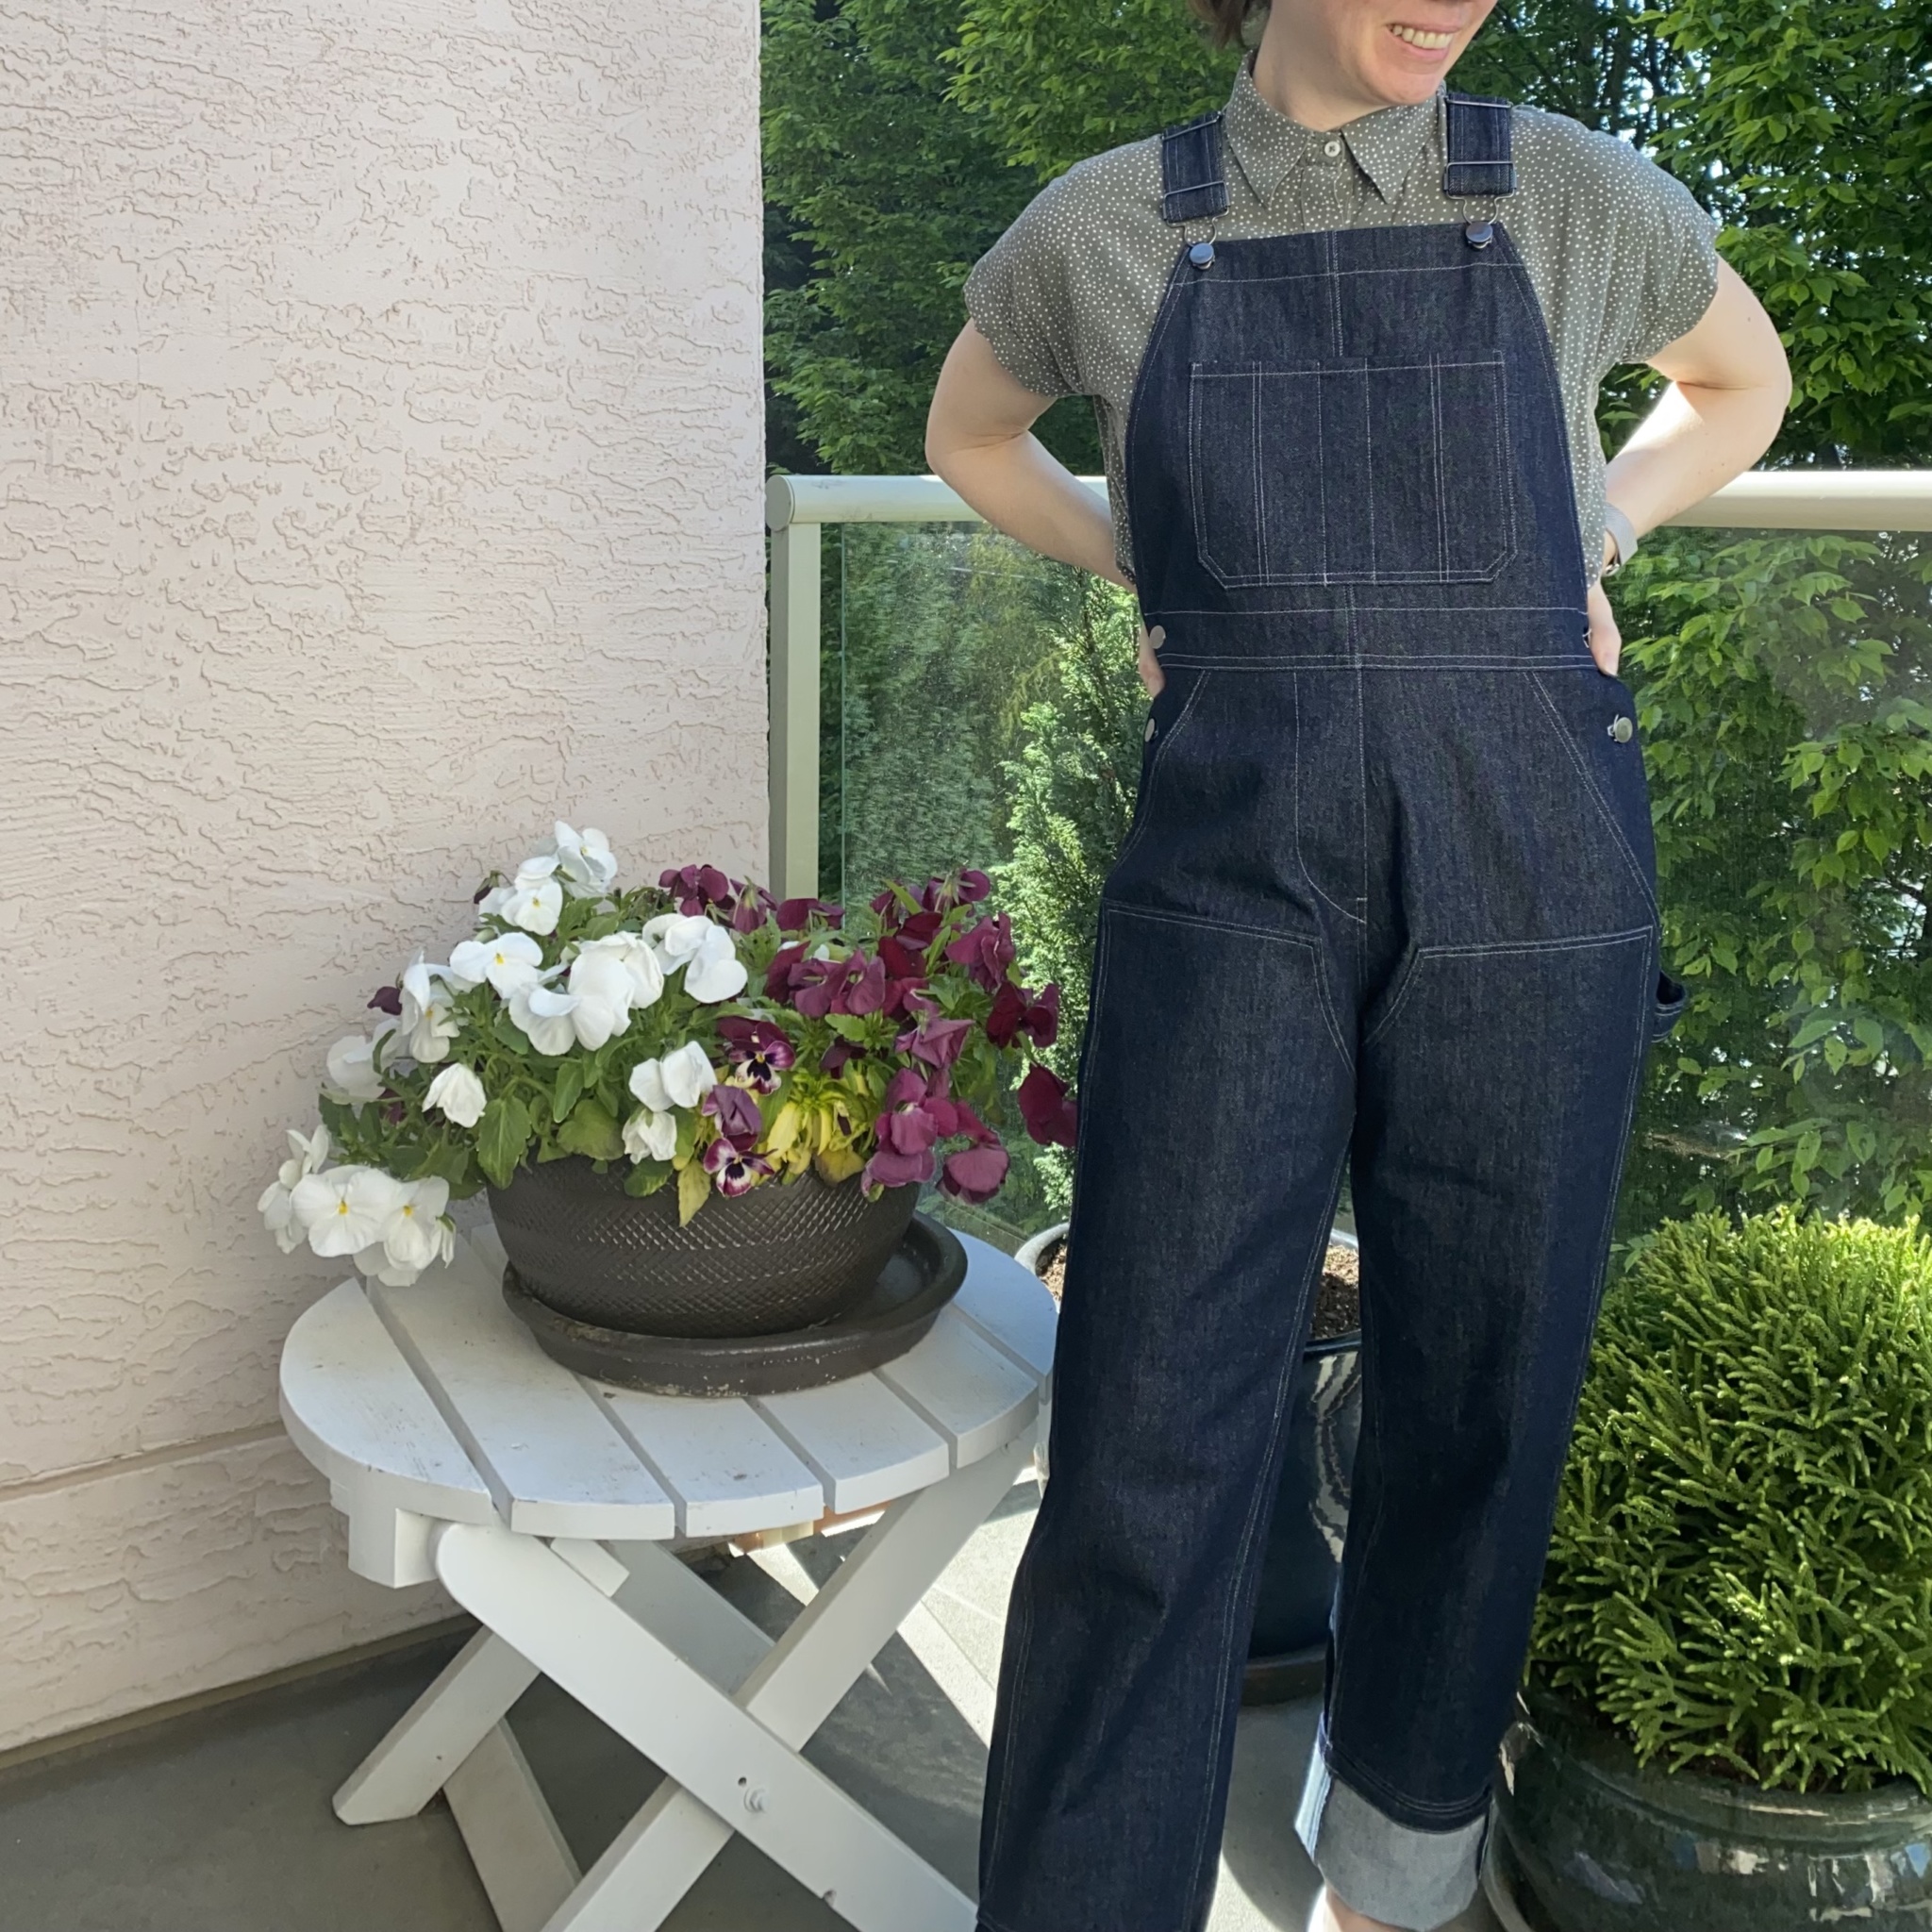 Lindsay Janeane – A sewing and DIY blog